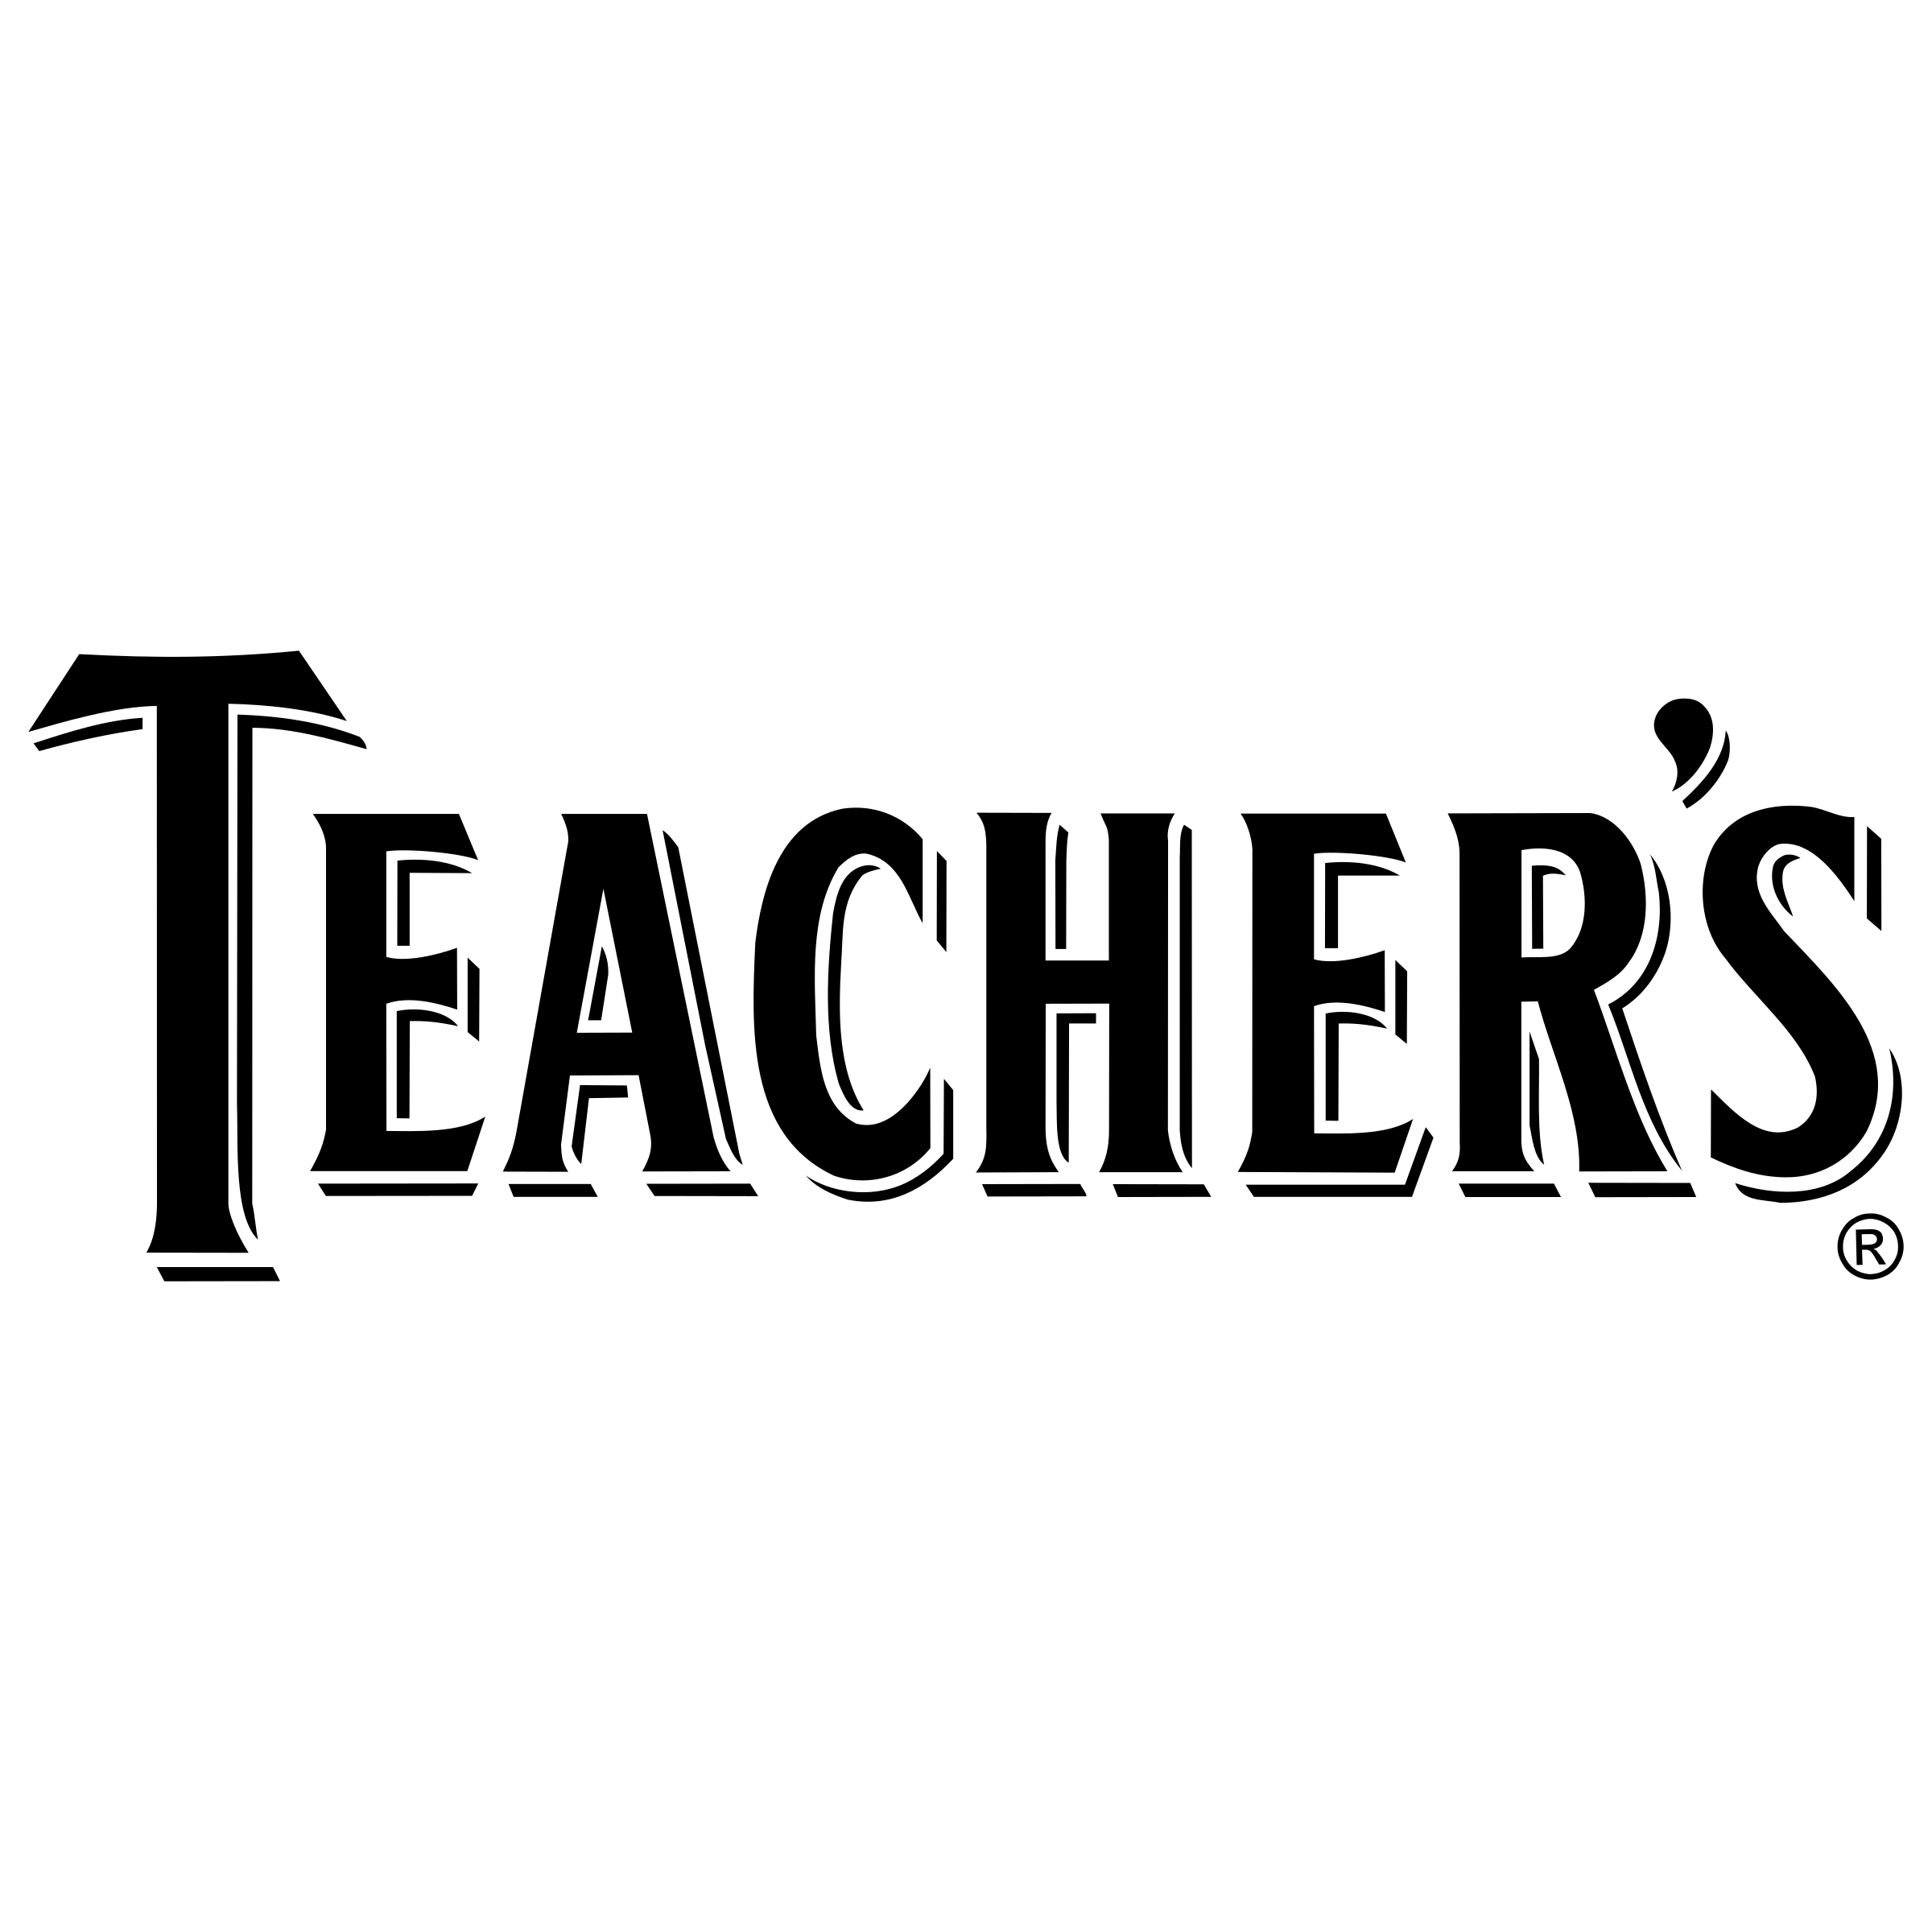 Computer Icons Teacher Education Student, teacher, text, logo png | PNGEgg